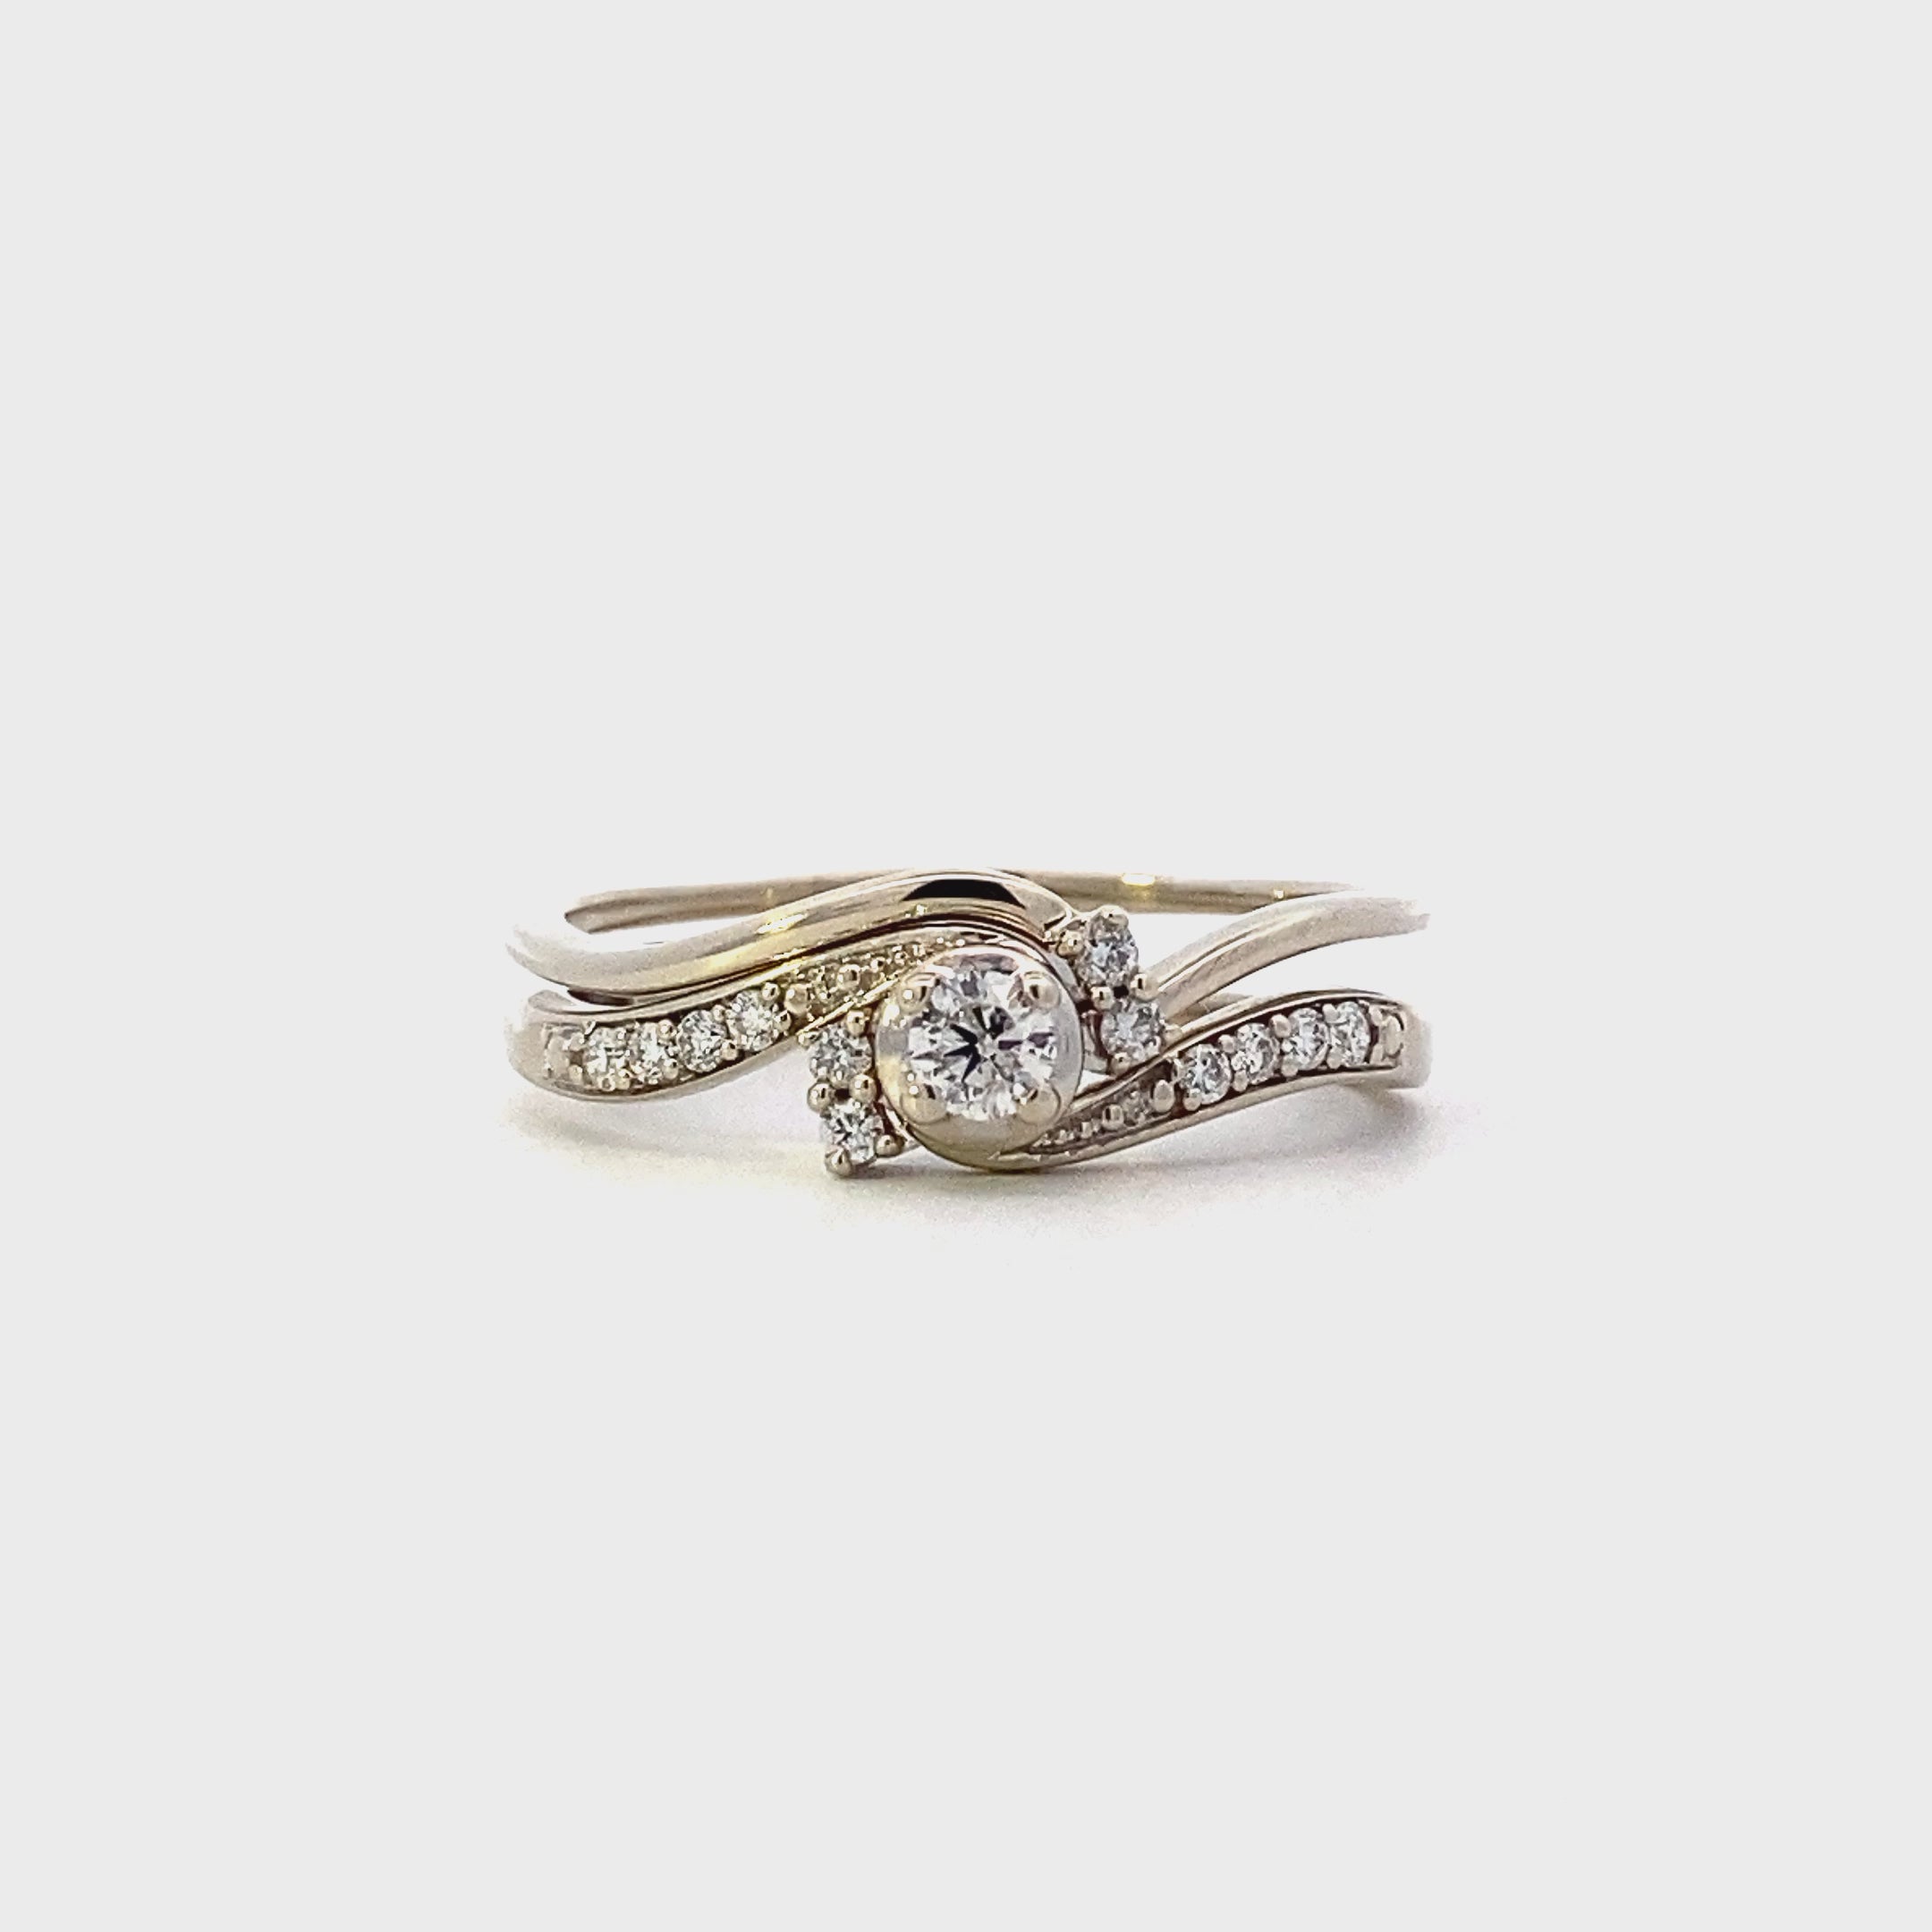 10K White Gold Diamond Engagement & Wedding Ring Set - 0.29ct